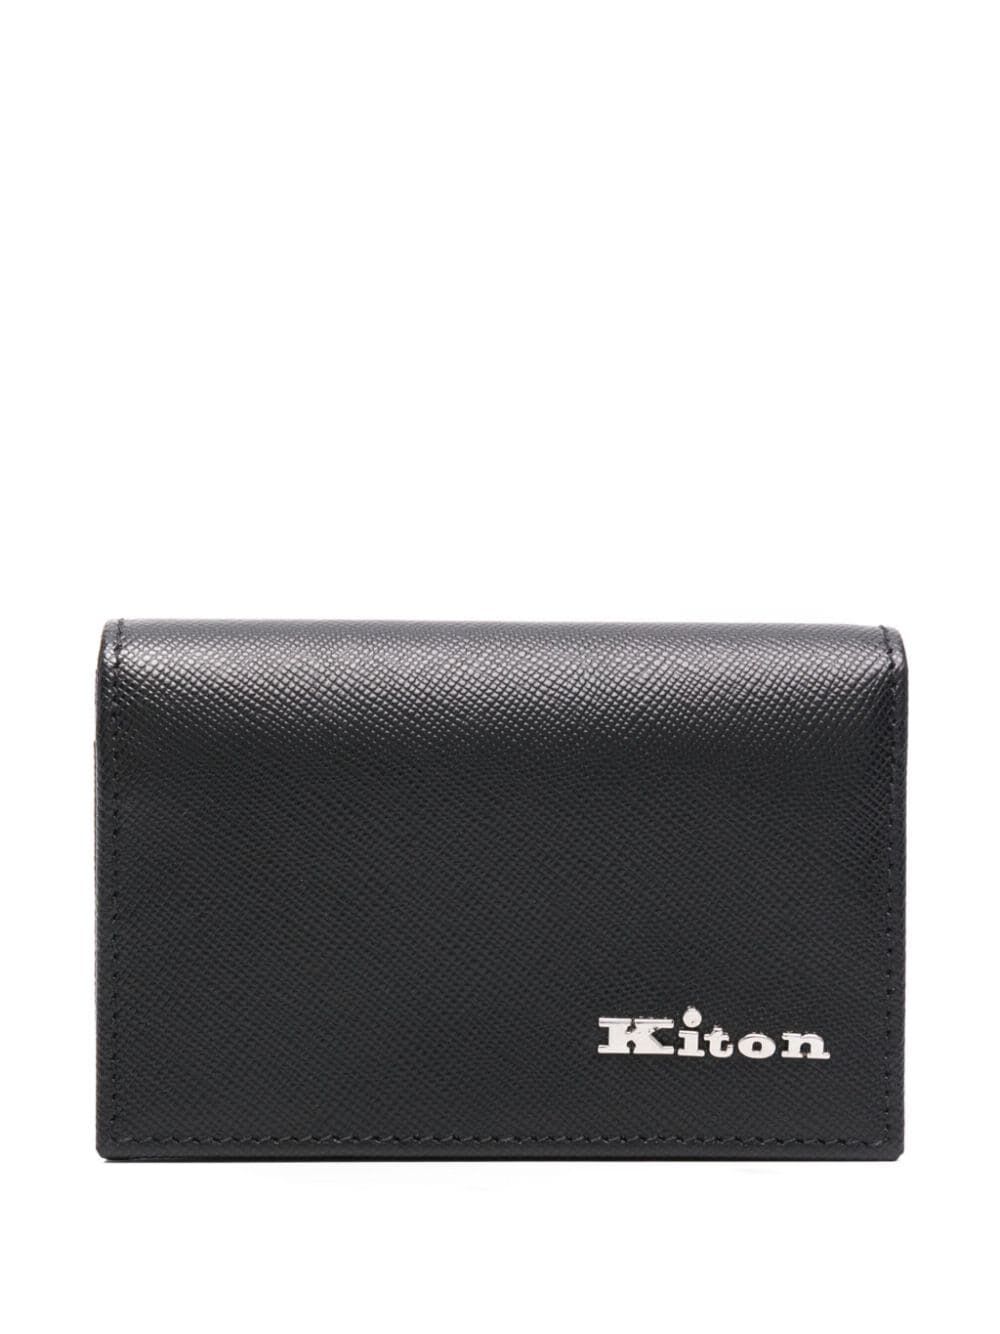 Kiton Wallet